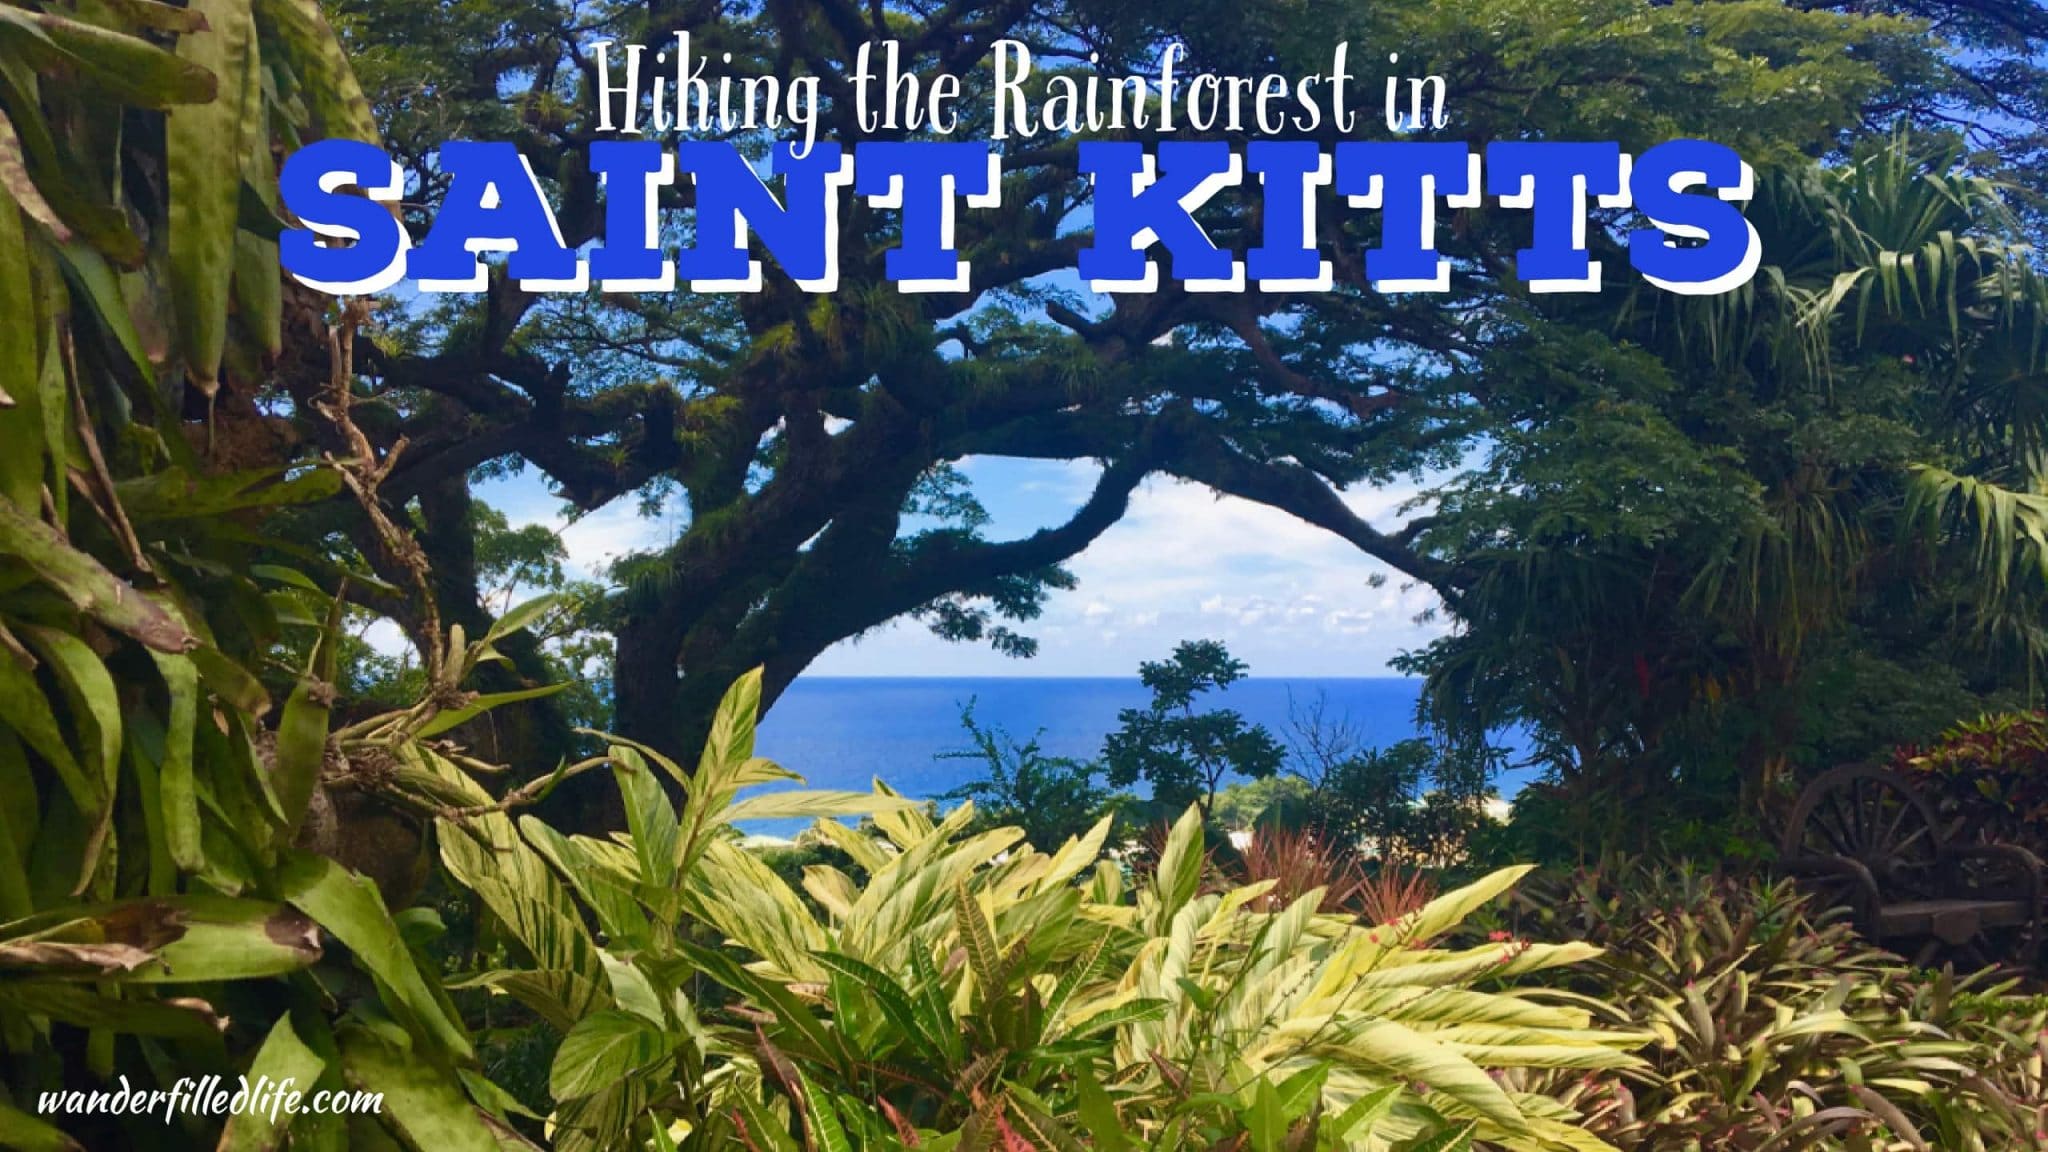 Hiking the Rainforest in Saint Kitts